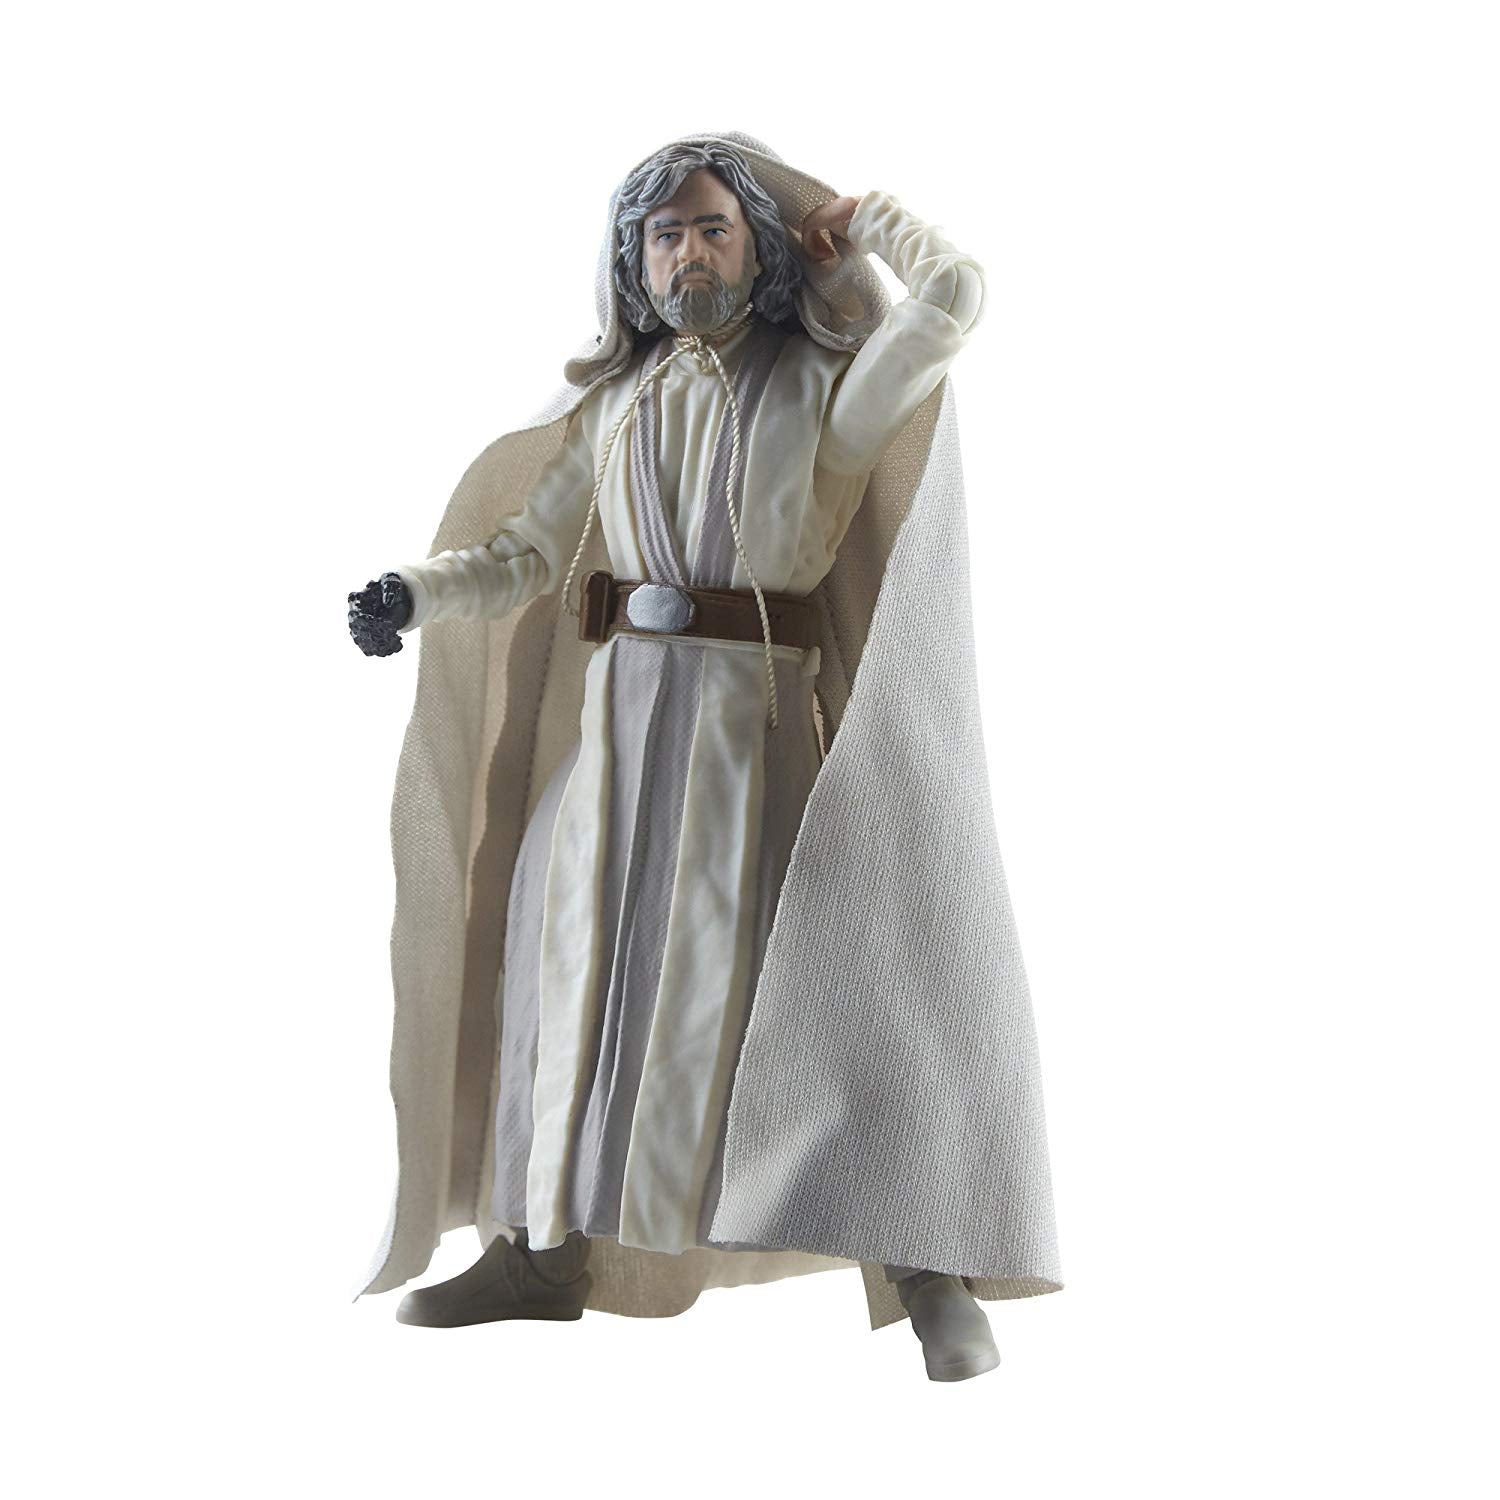 Hasbro Star Wars Black Series Force Awakens #46 Luke Skywalker (Jedi Master) 6 Inch Action Figure